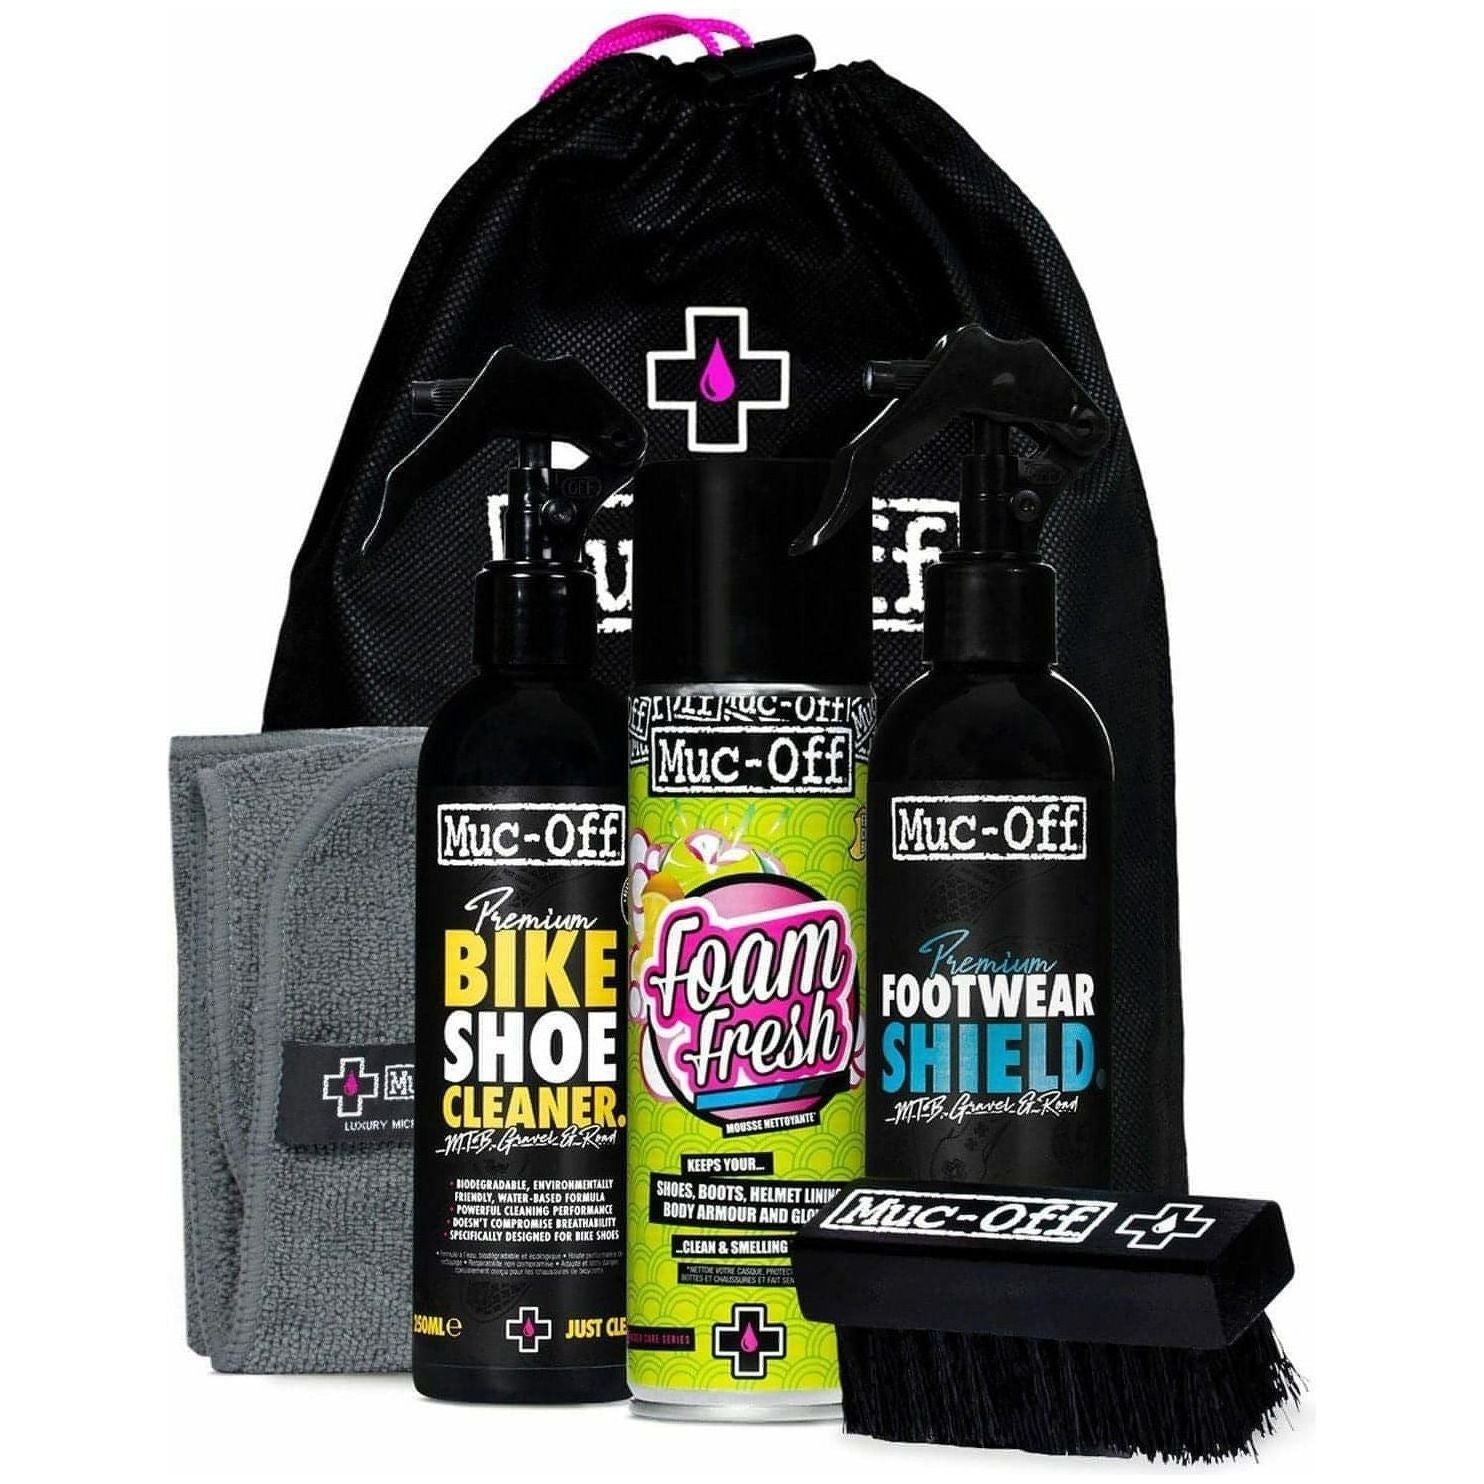 Muc-Off Premium Bike Shoe Care Kit 5037835208498 - Start Fitness